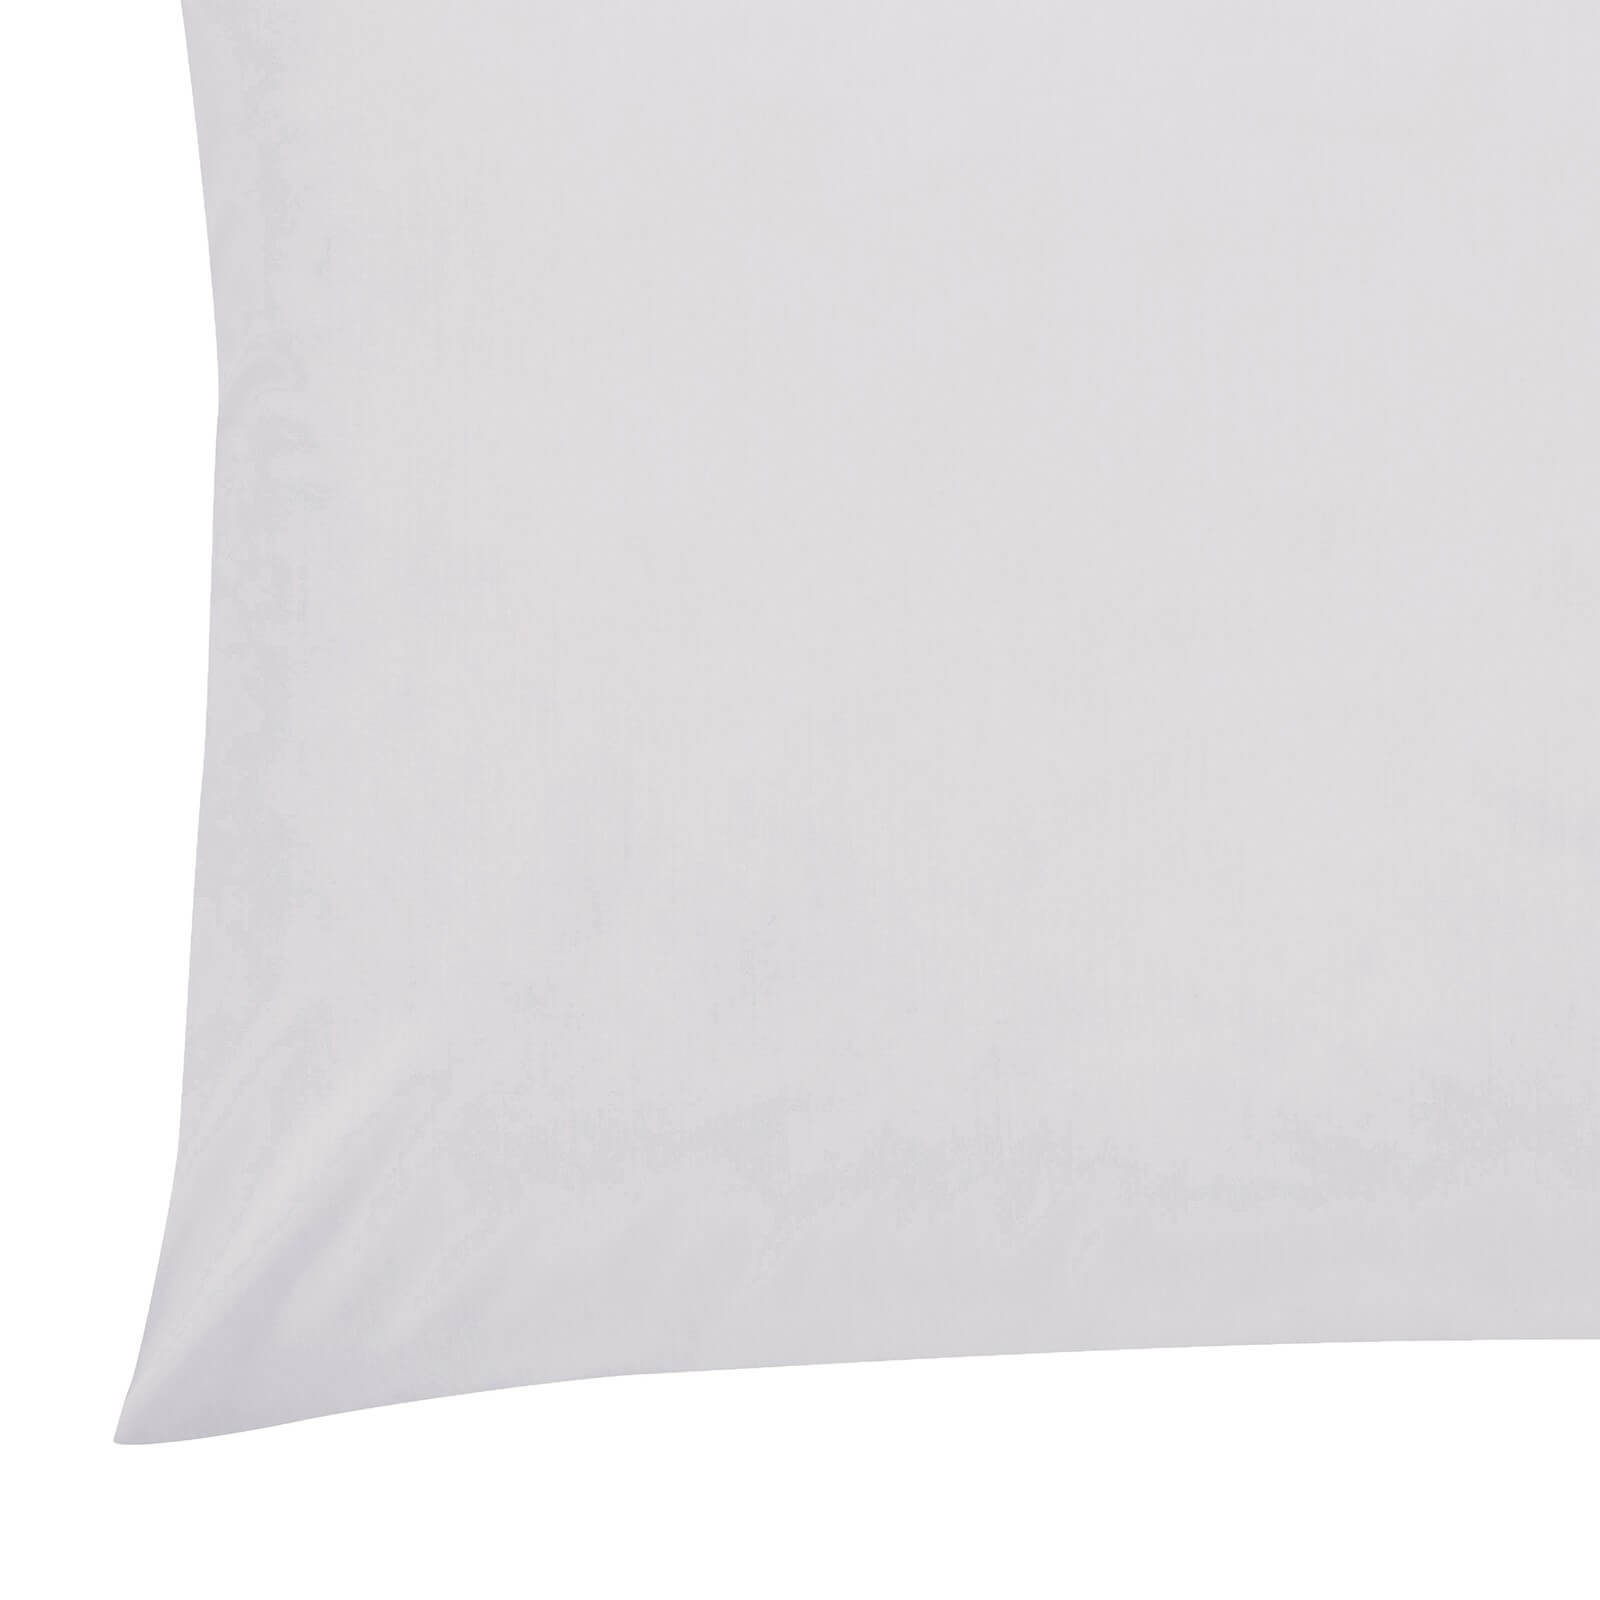 Helena Springfield Pillowcase - Housewife - Silver